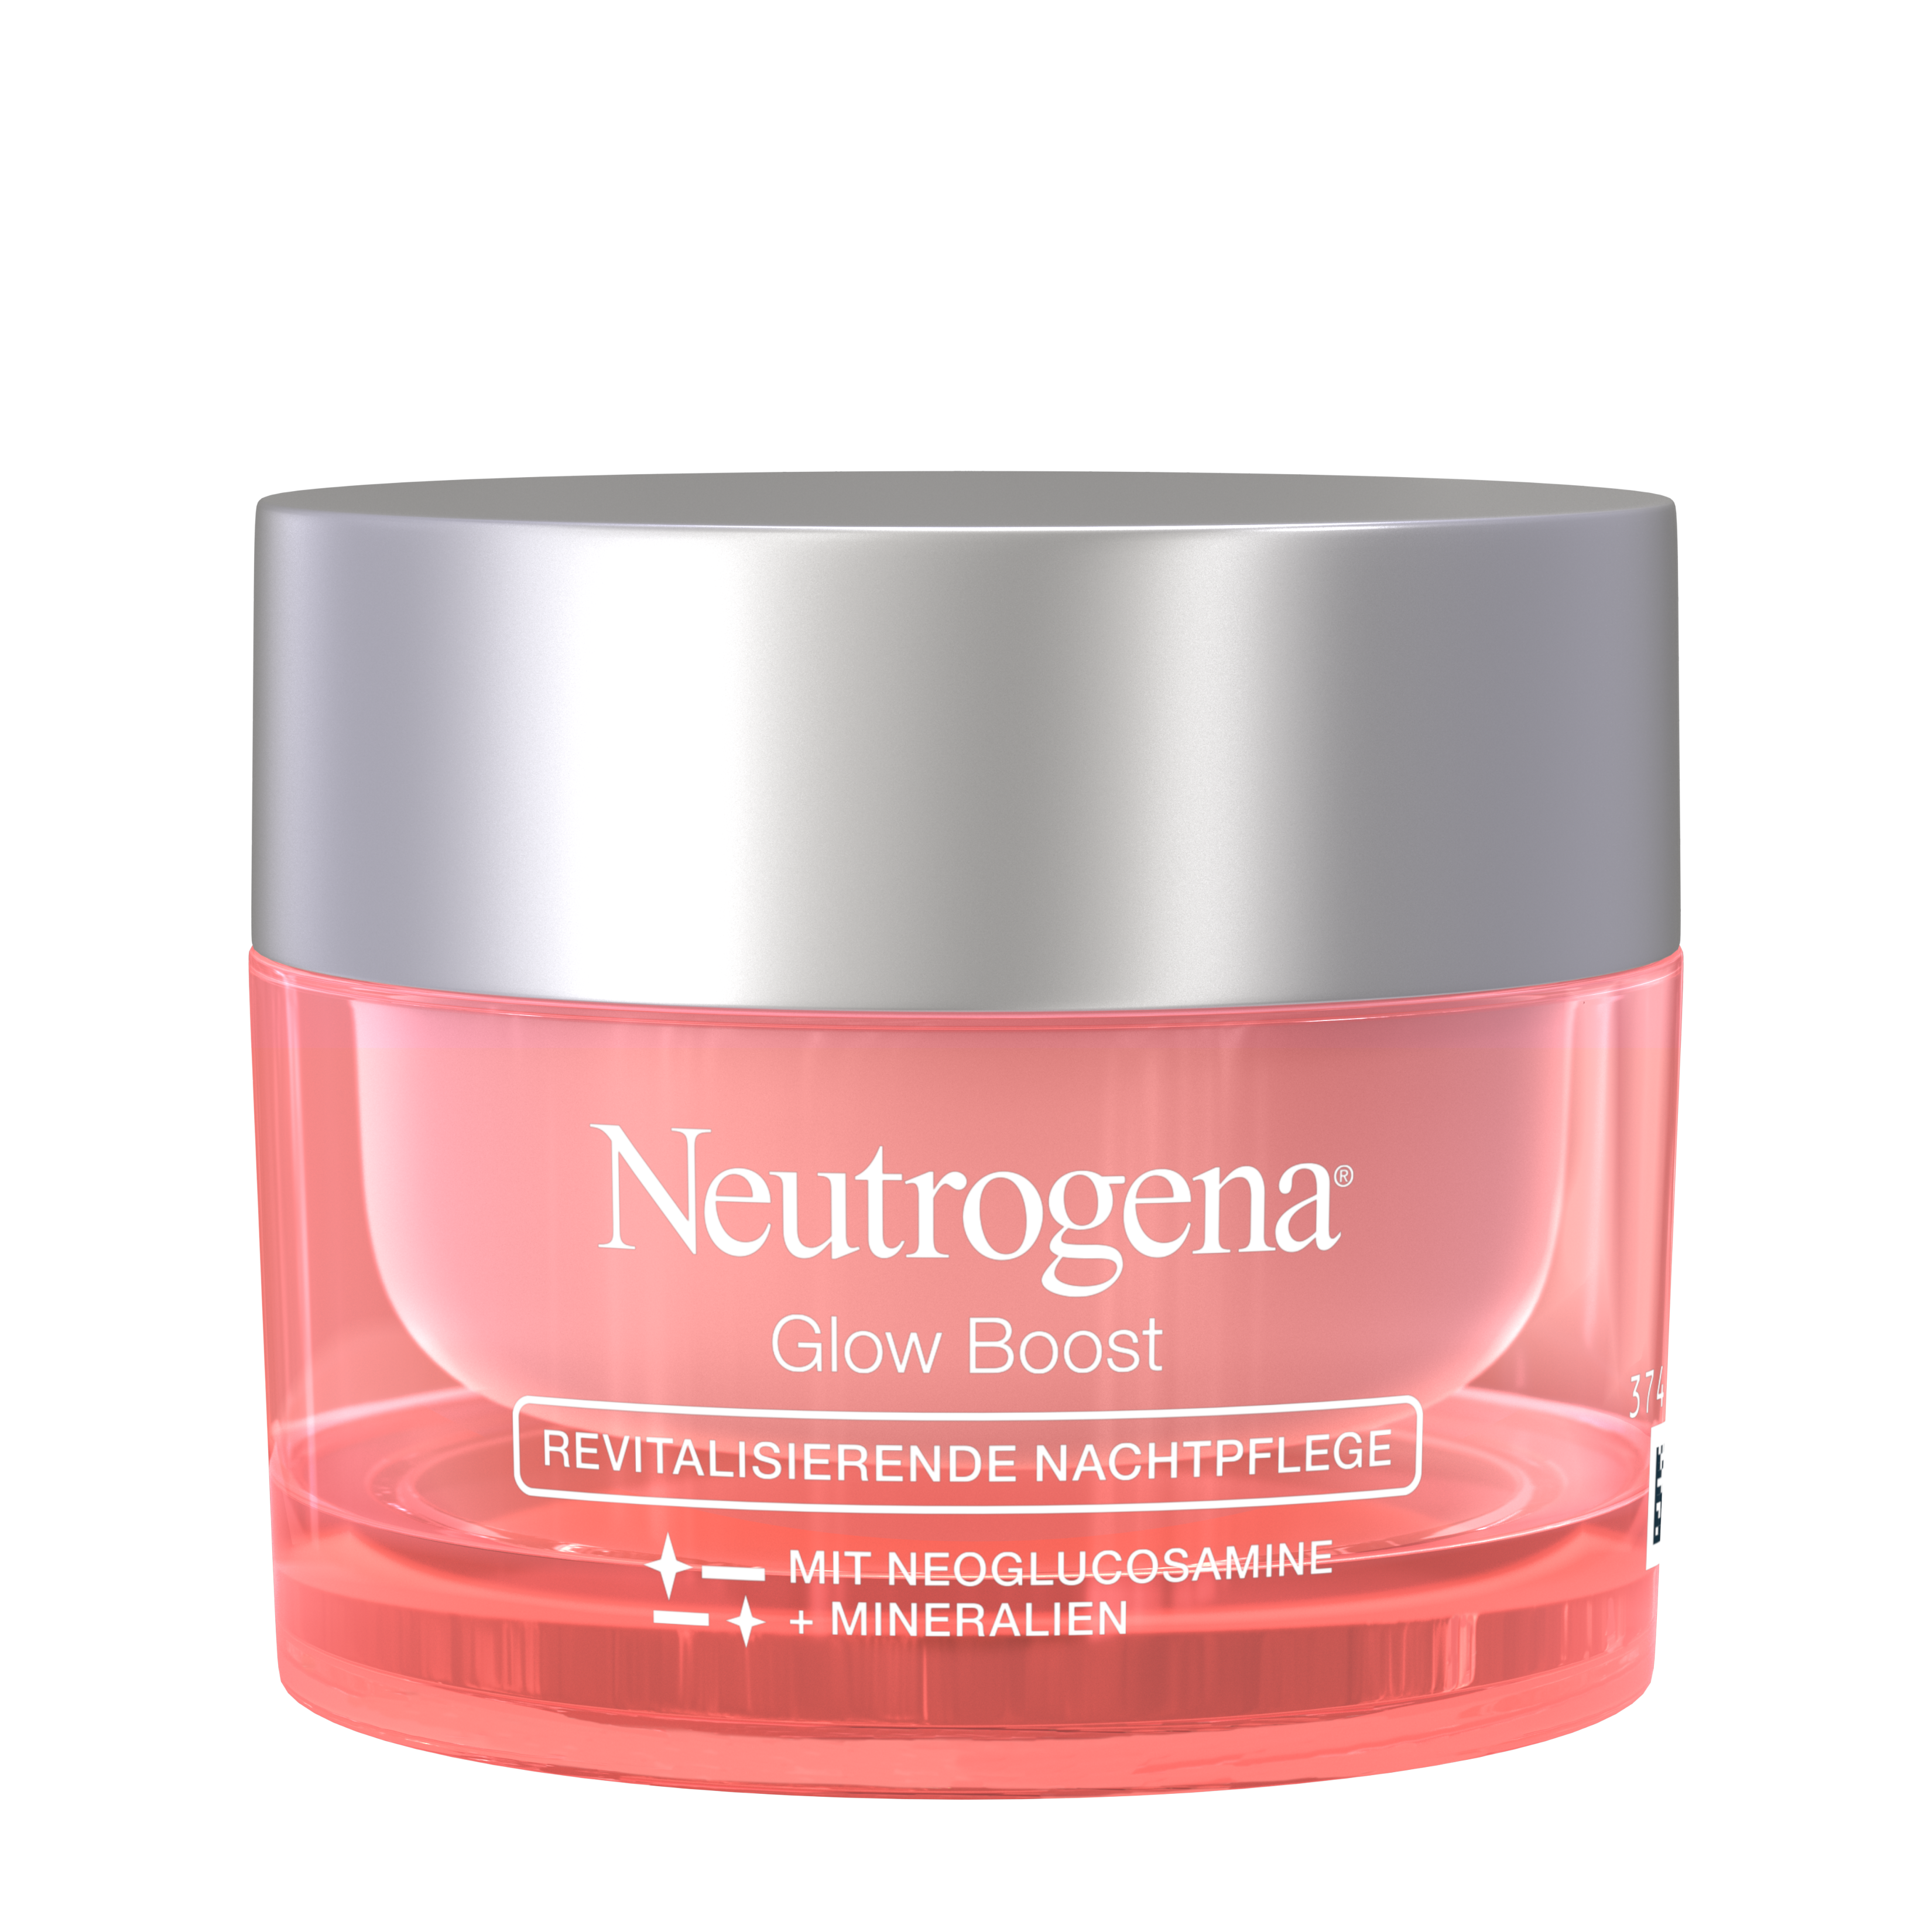 Neutrogena® Glow Boost Revitalisierende Nachtpflege, 50 ml, UVP* 12,99 €